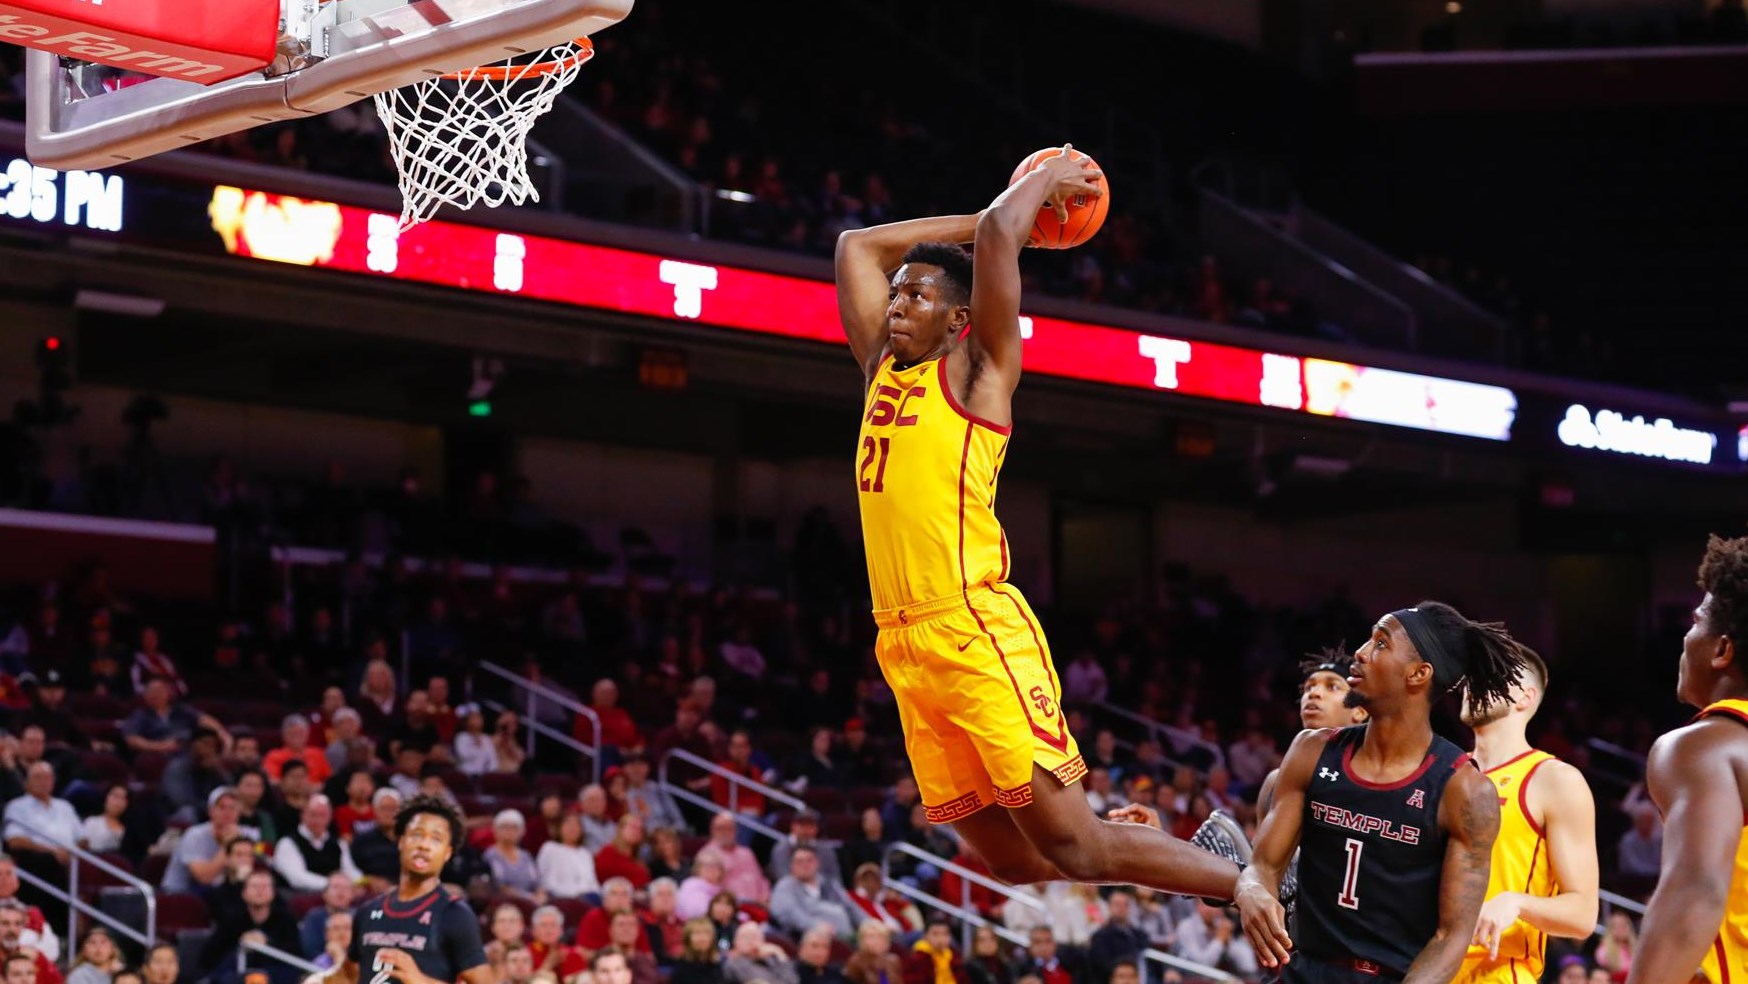 NBA Draft: Potential has stock of USC's Onyeka Okongwu rising